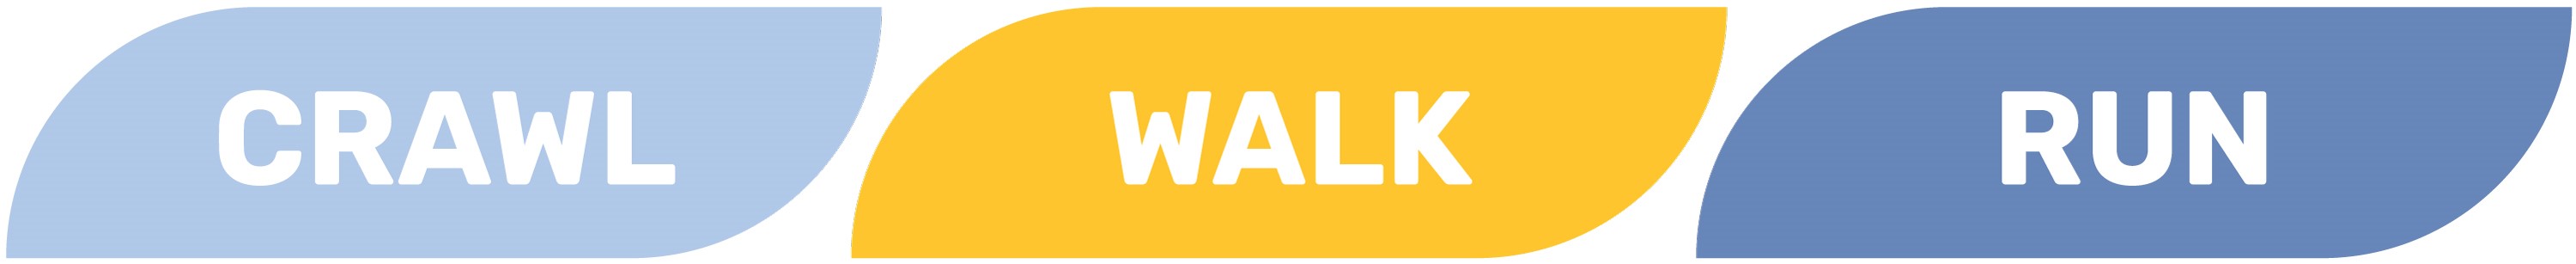 Blog 3 graphic - Crawl Walk Run